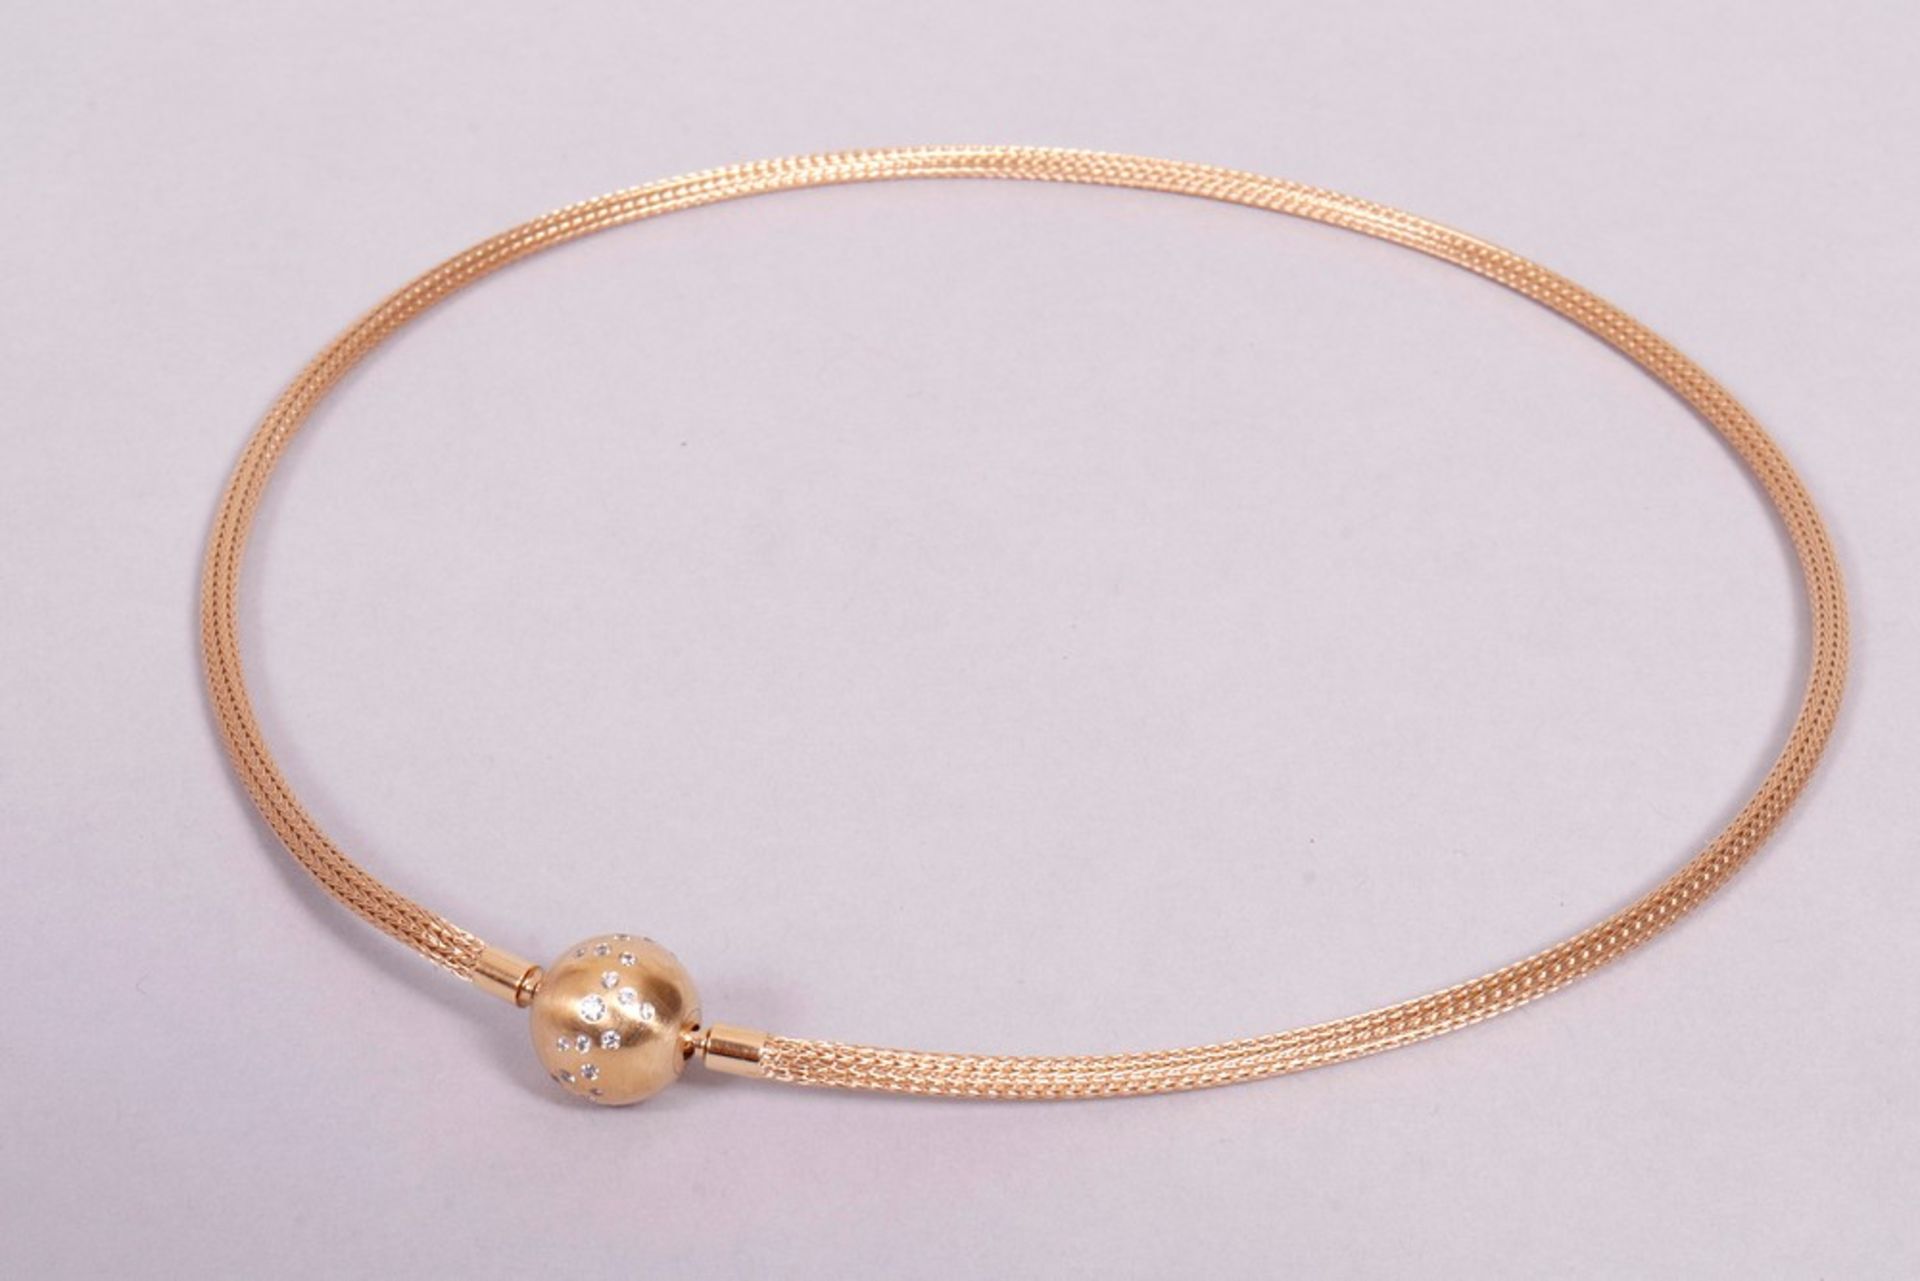 Woven necklace, 750 gold, Jörg Hein